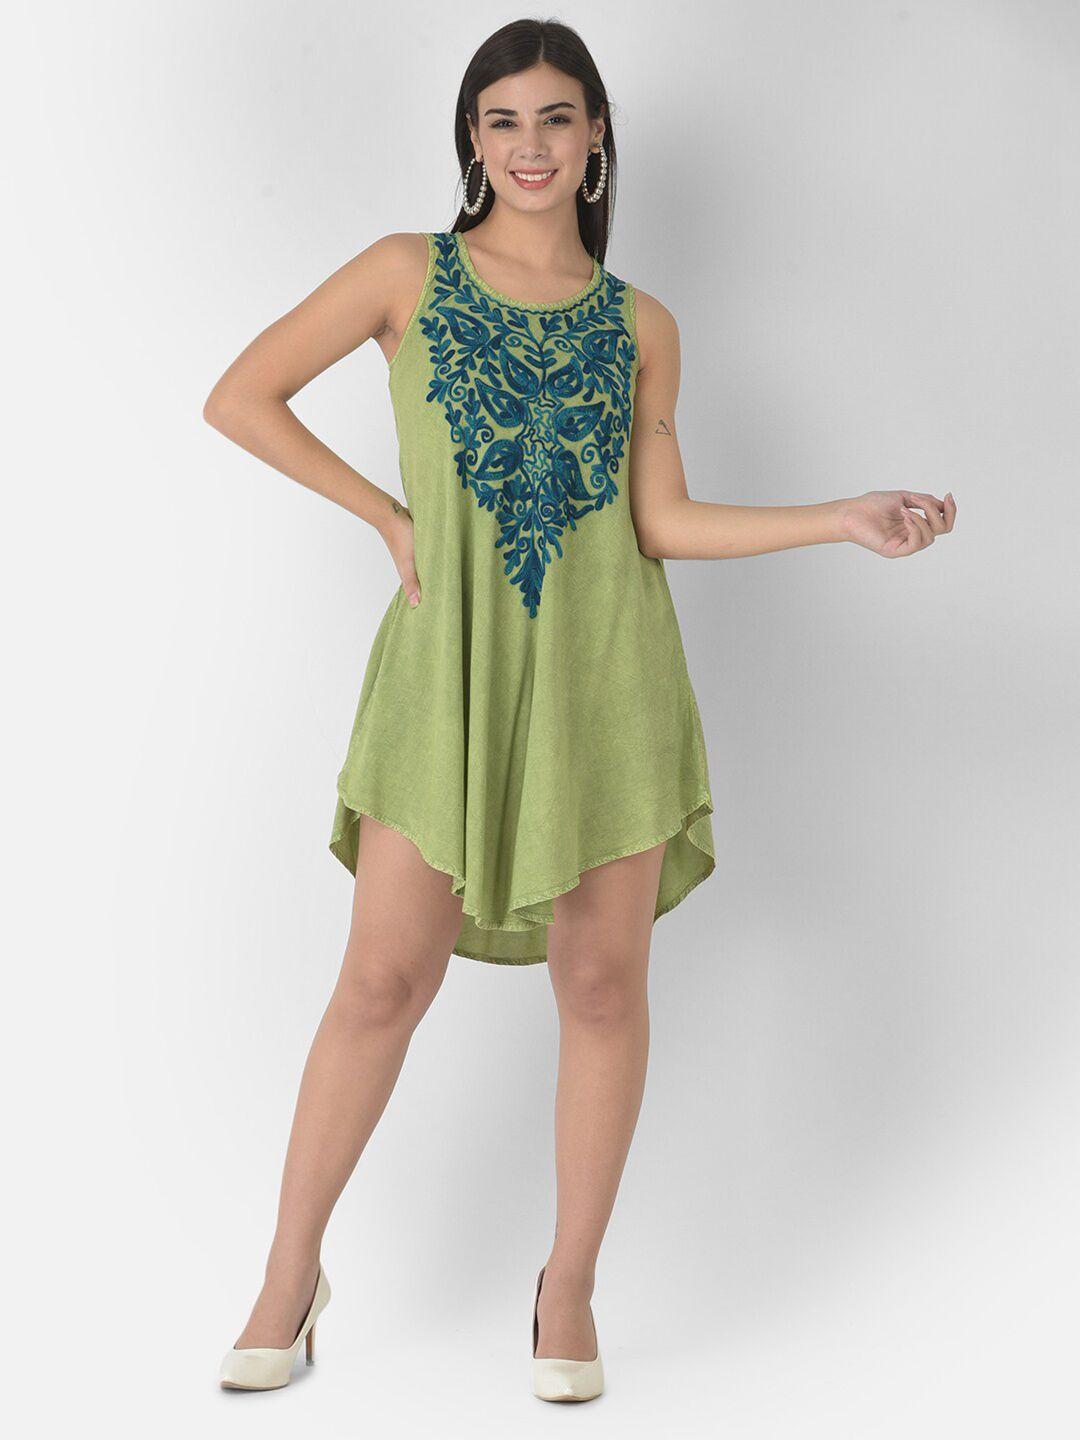 veldress women green & teal ethnic motifs embroidered dress